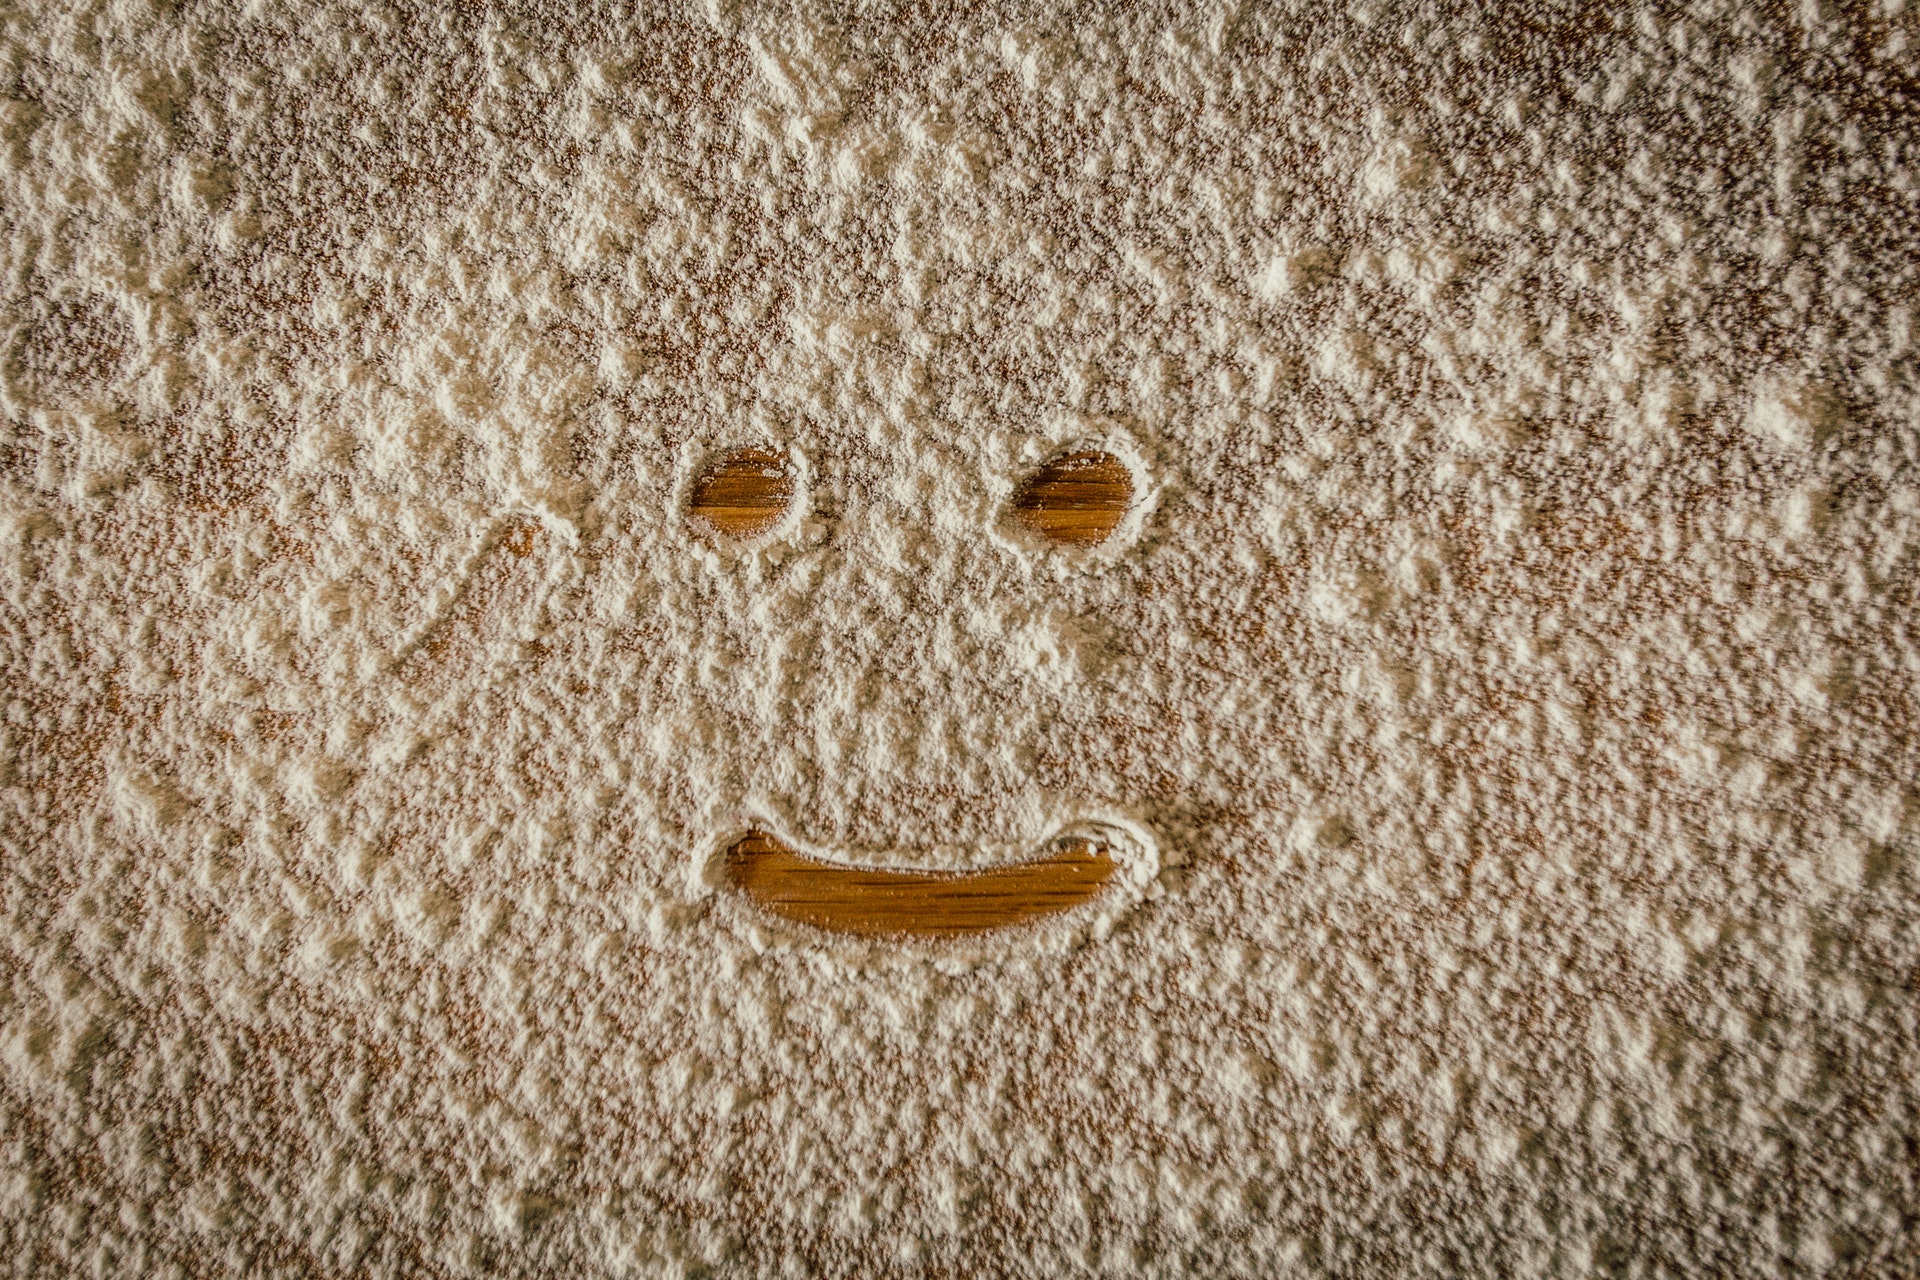 What's the healthiest alternative flour